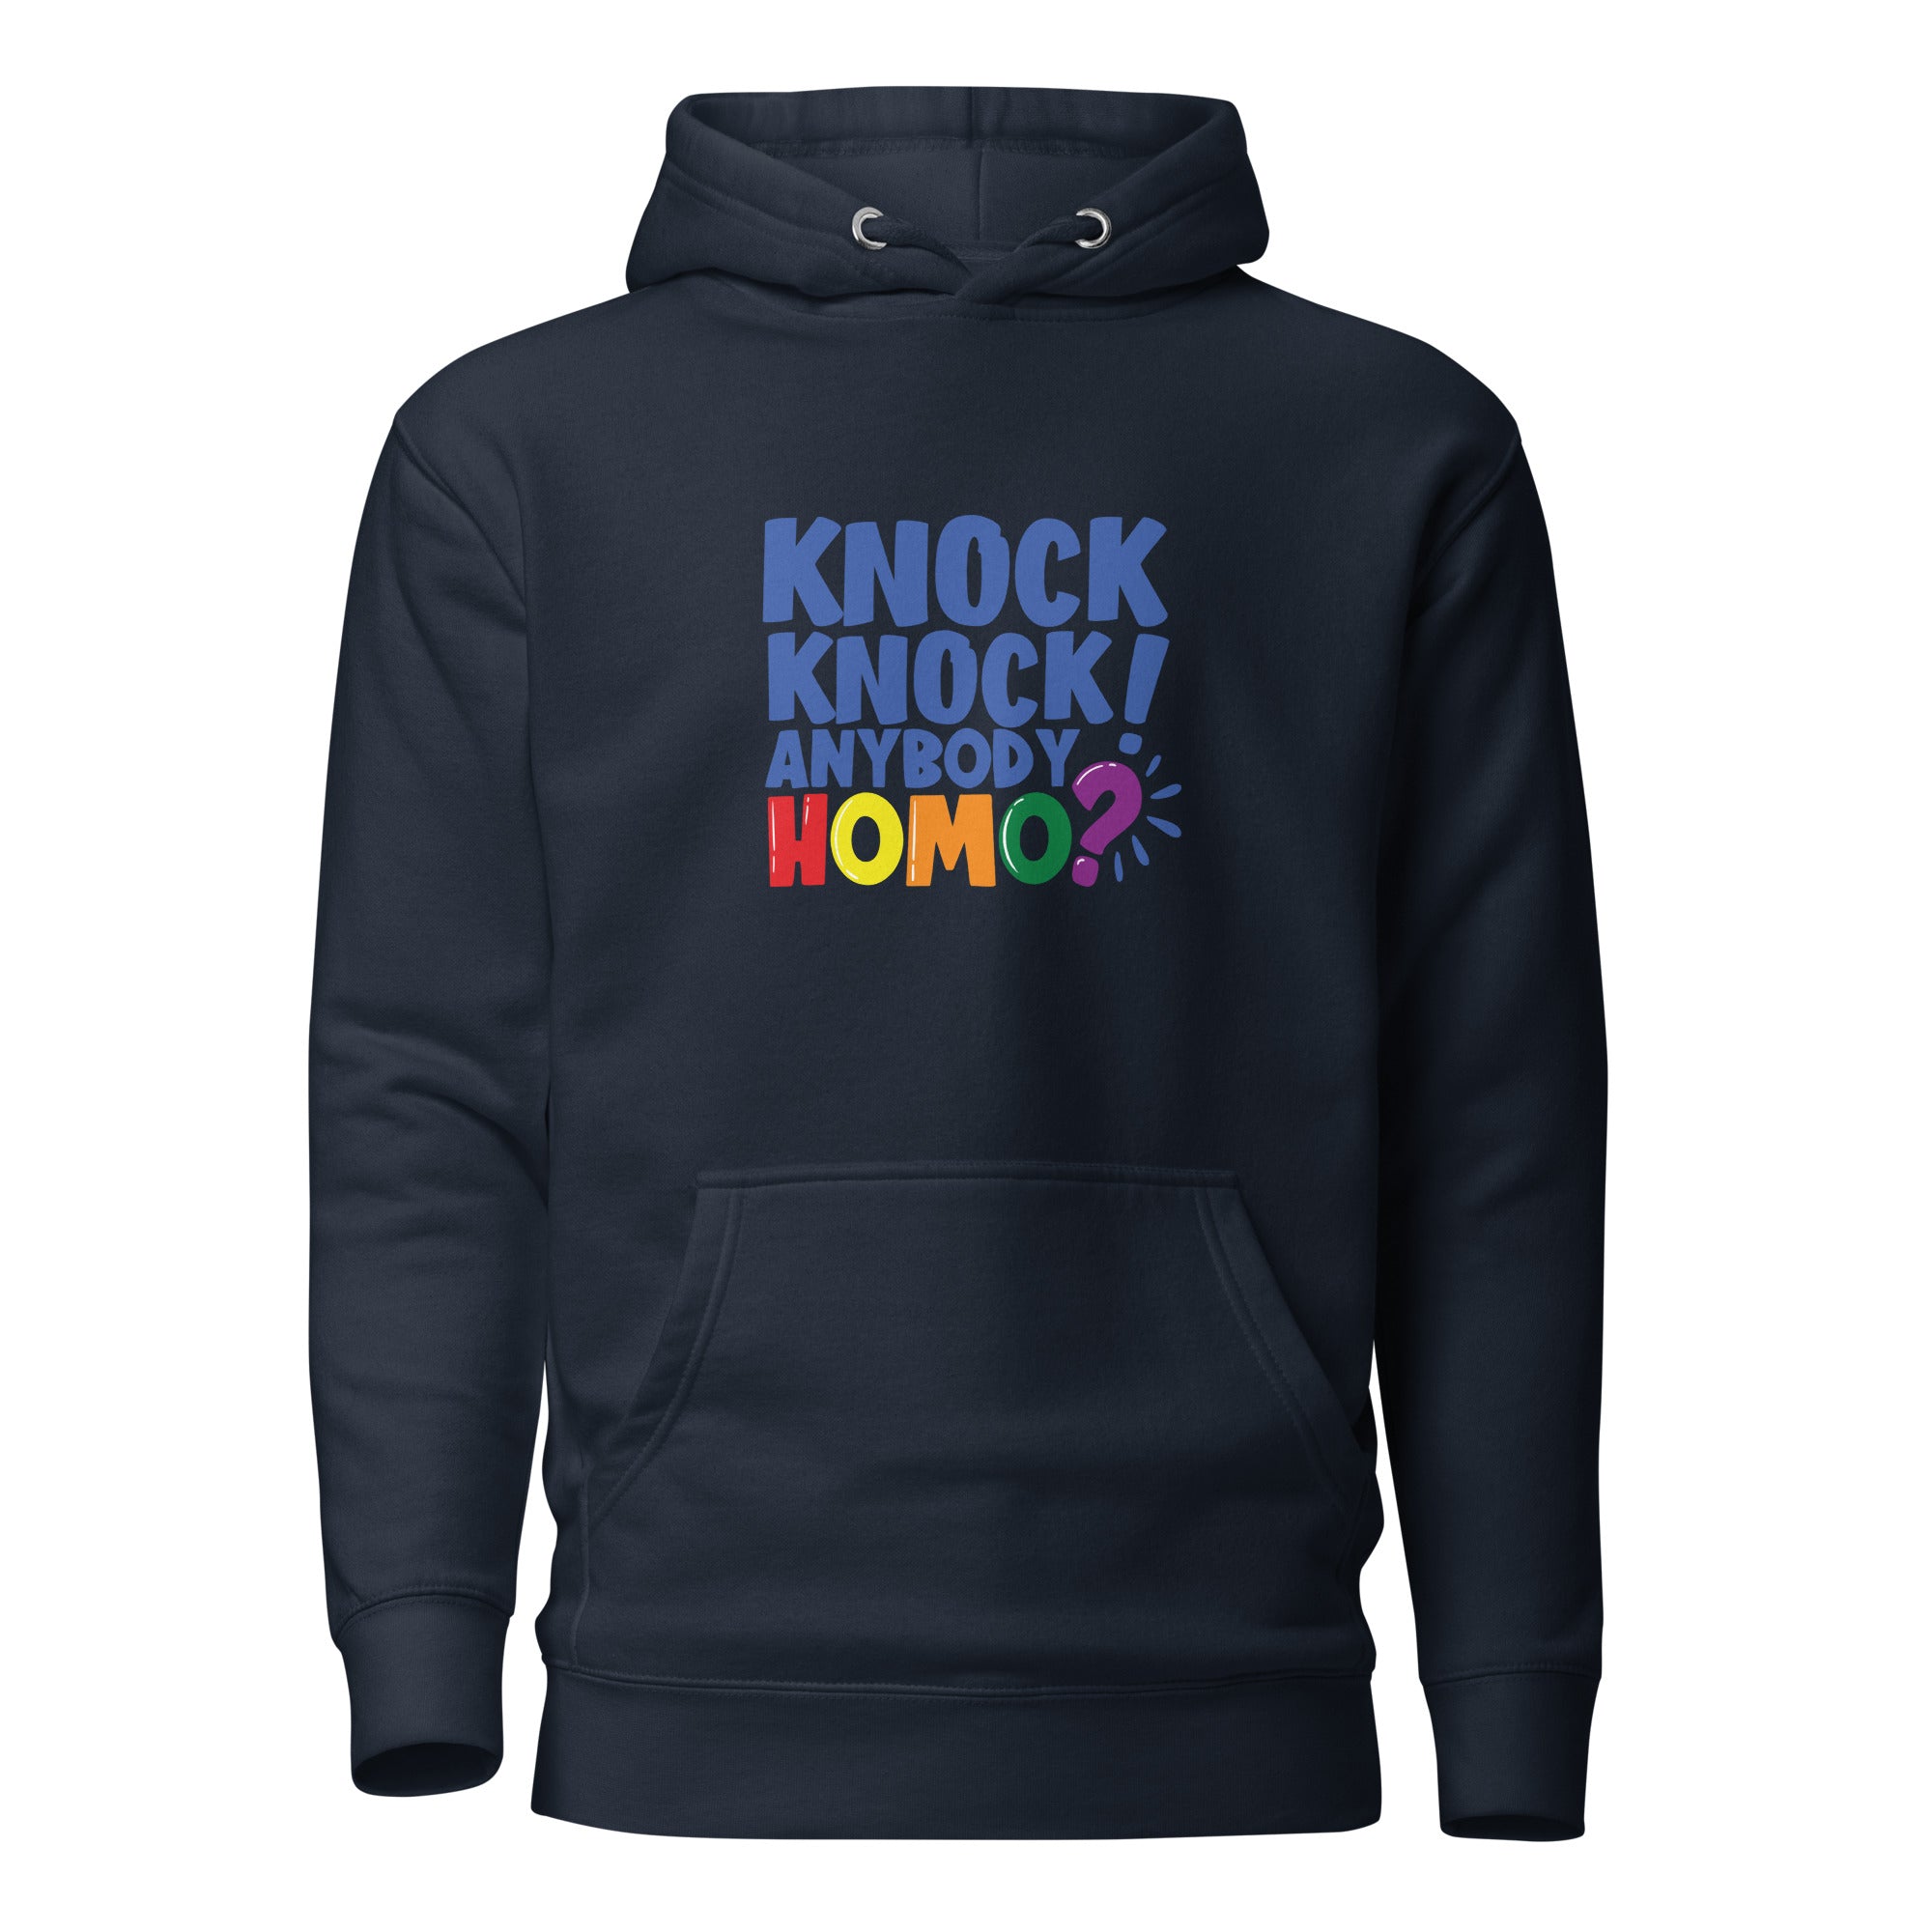 Unisex Hoodie- Knock knock anybody homo